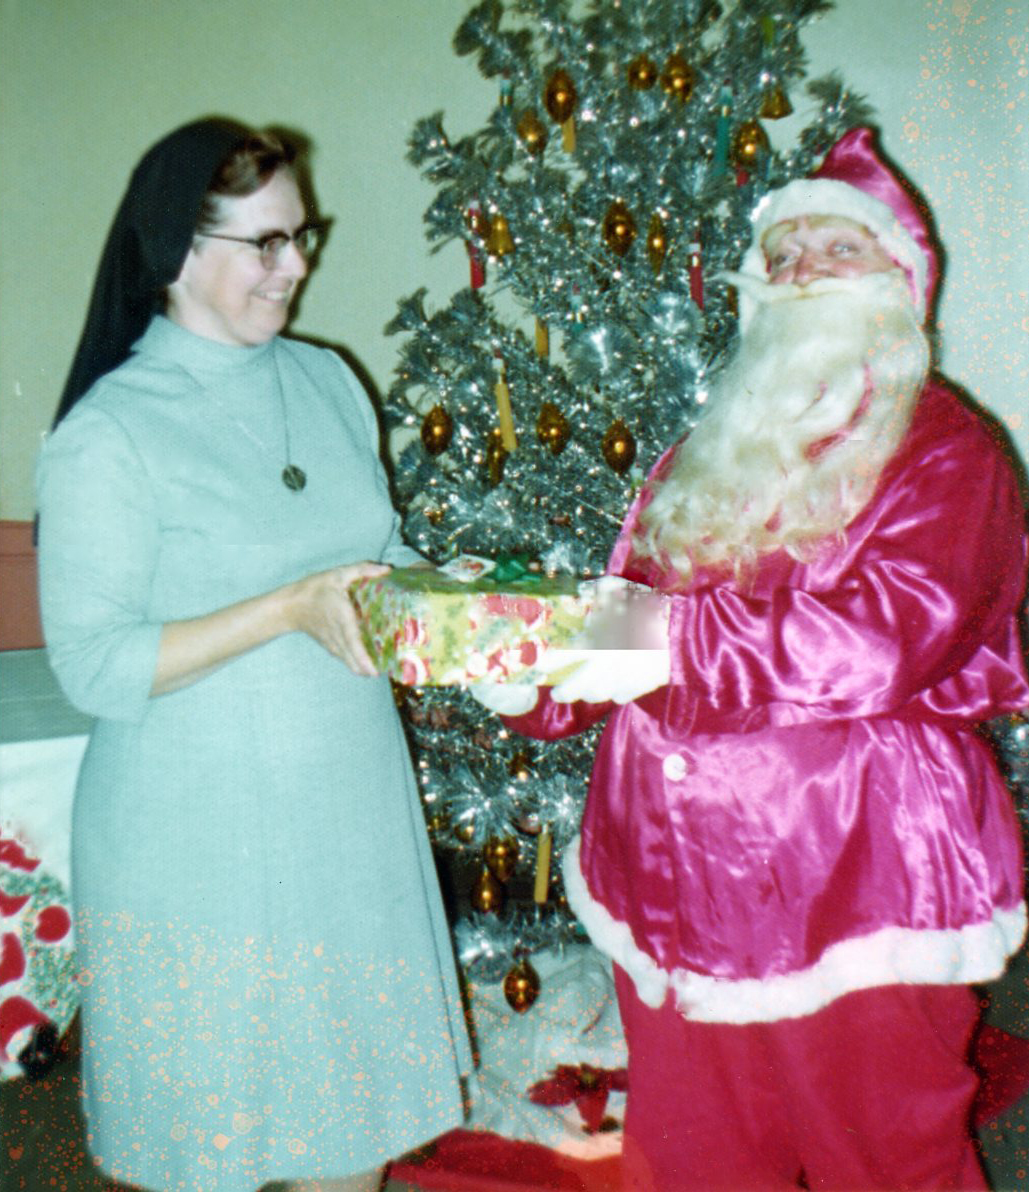 Sister Gertrude Marie Hagen with Santa at Christmas